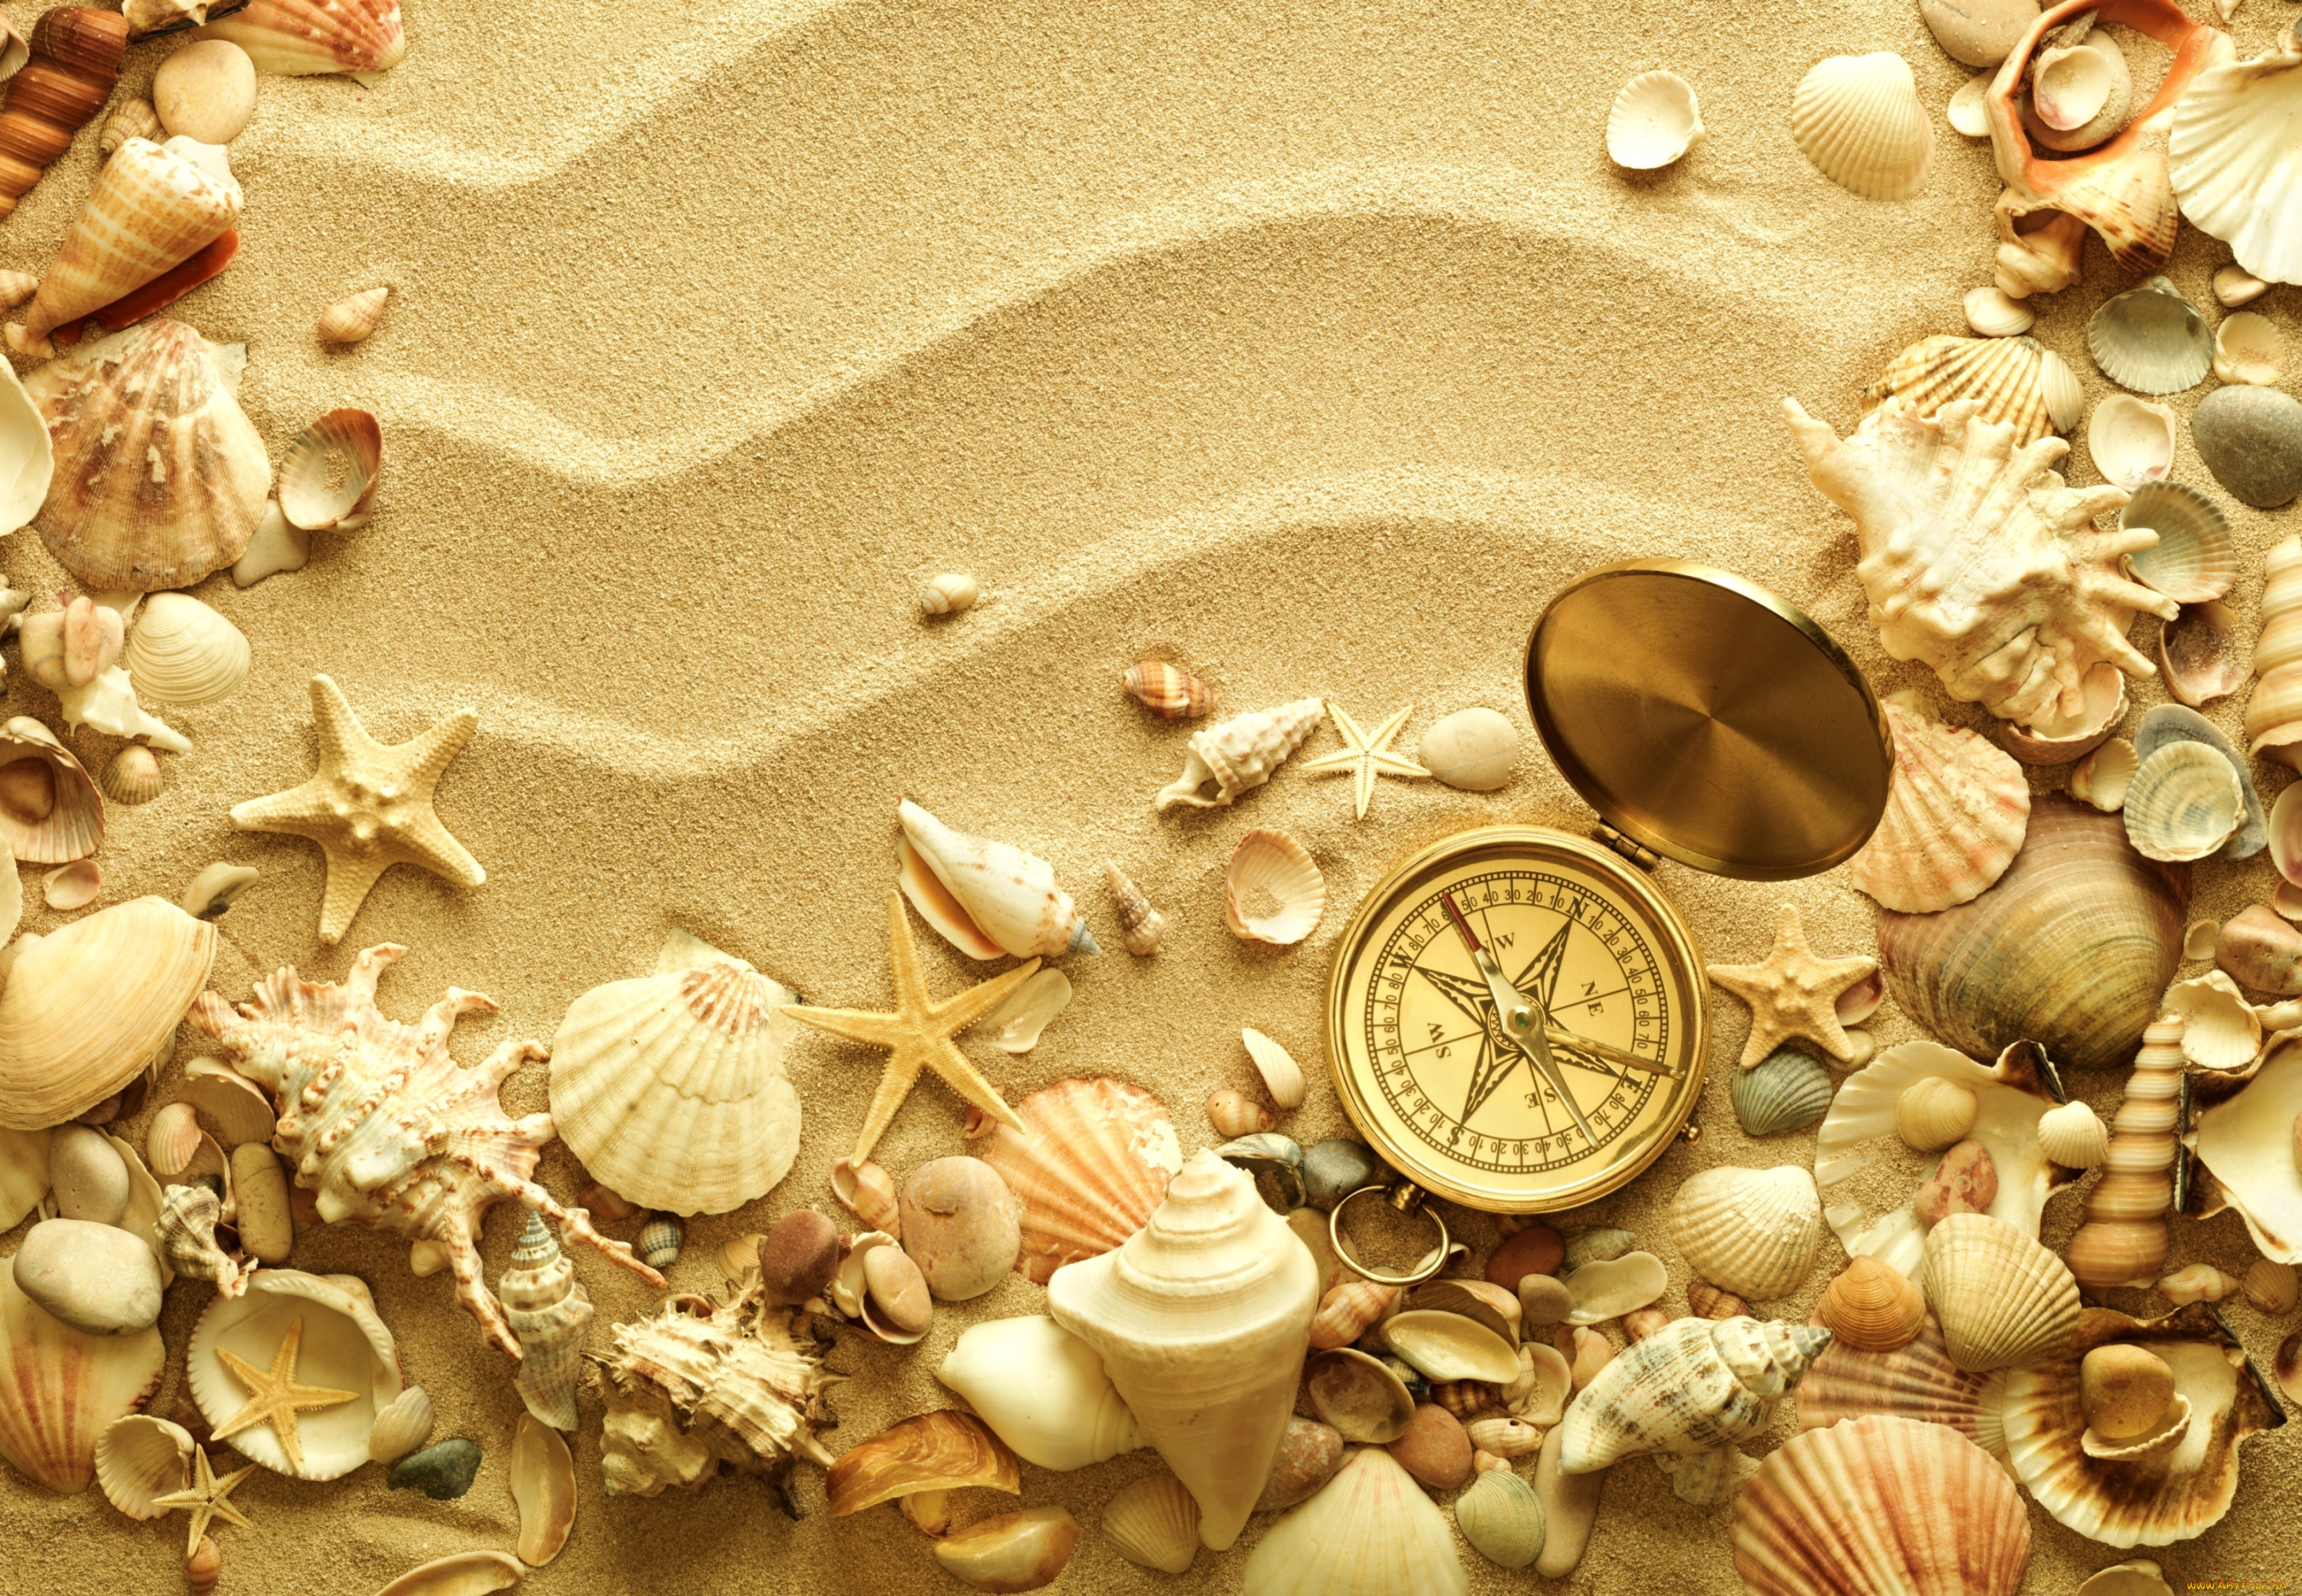 разное, ракушки, , кораллы, , декоративные, и, spa-камни, песок, компас